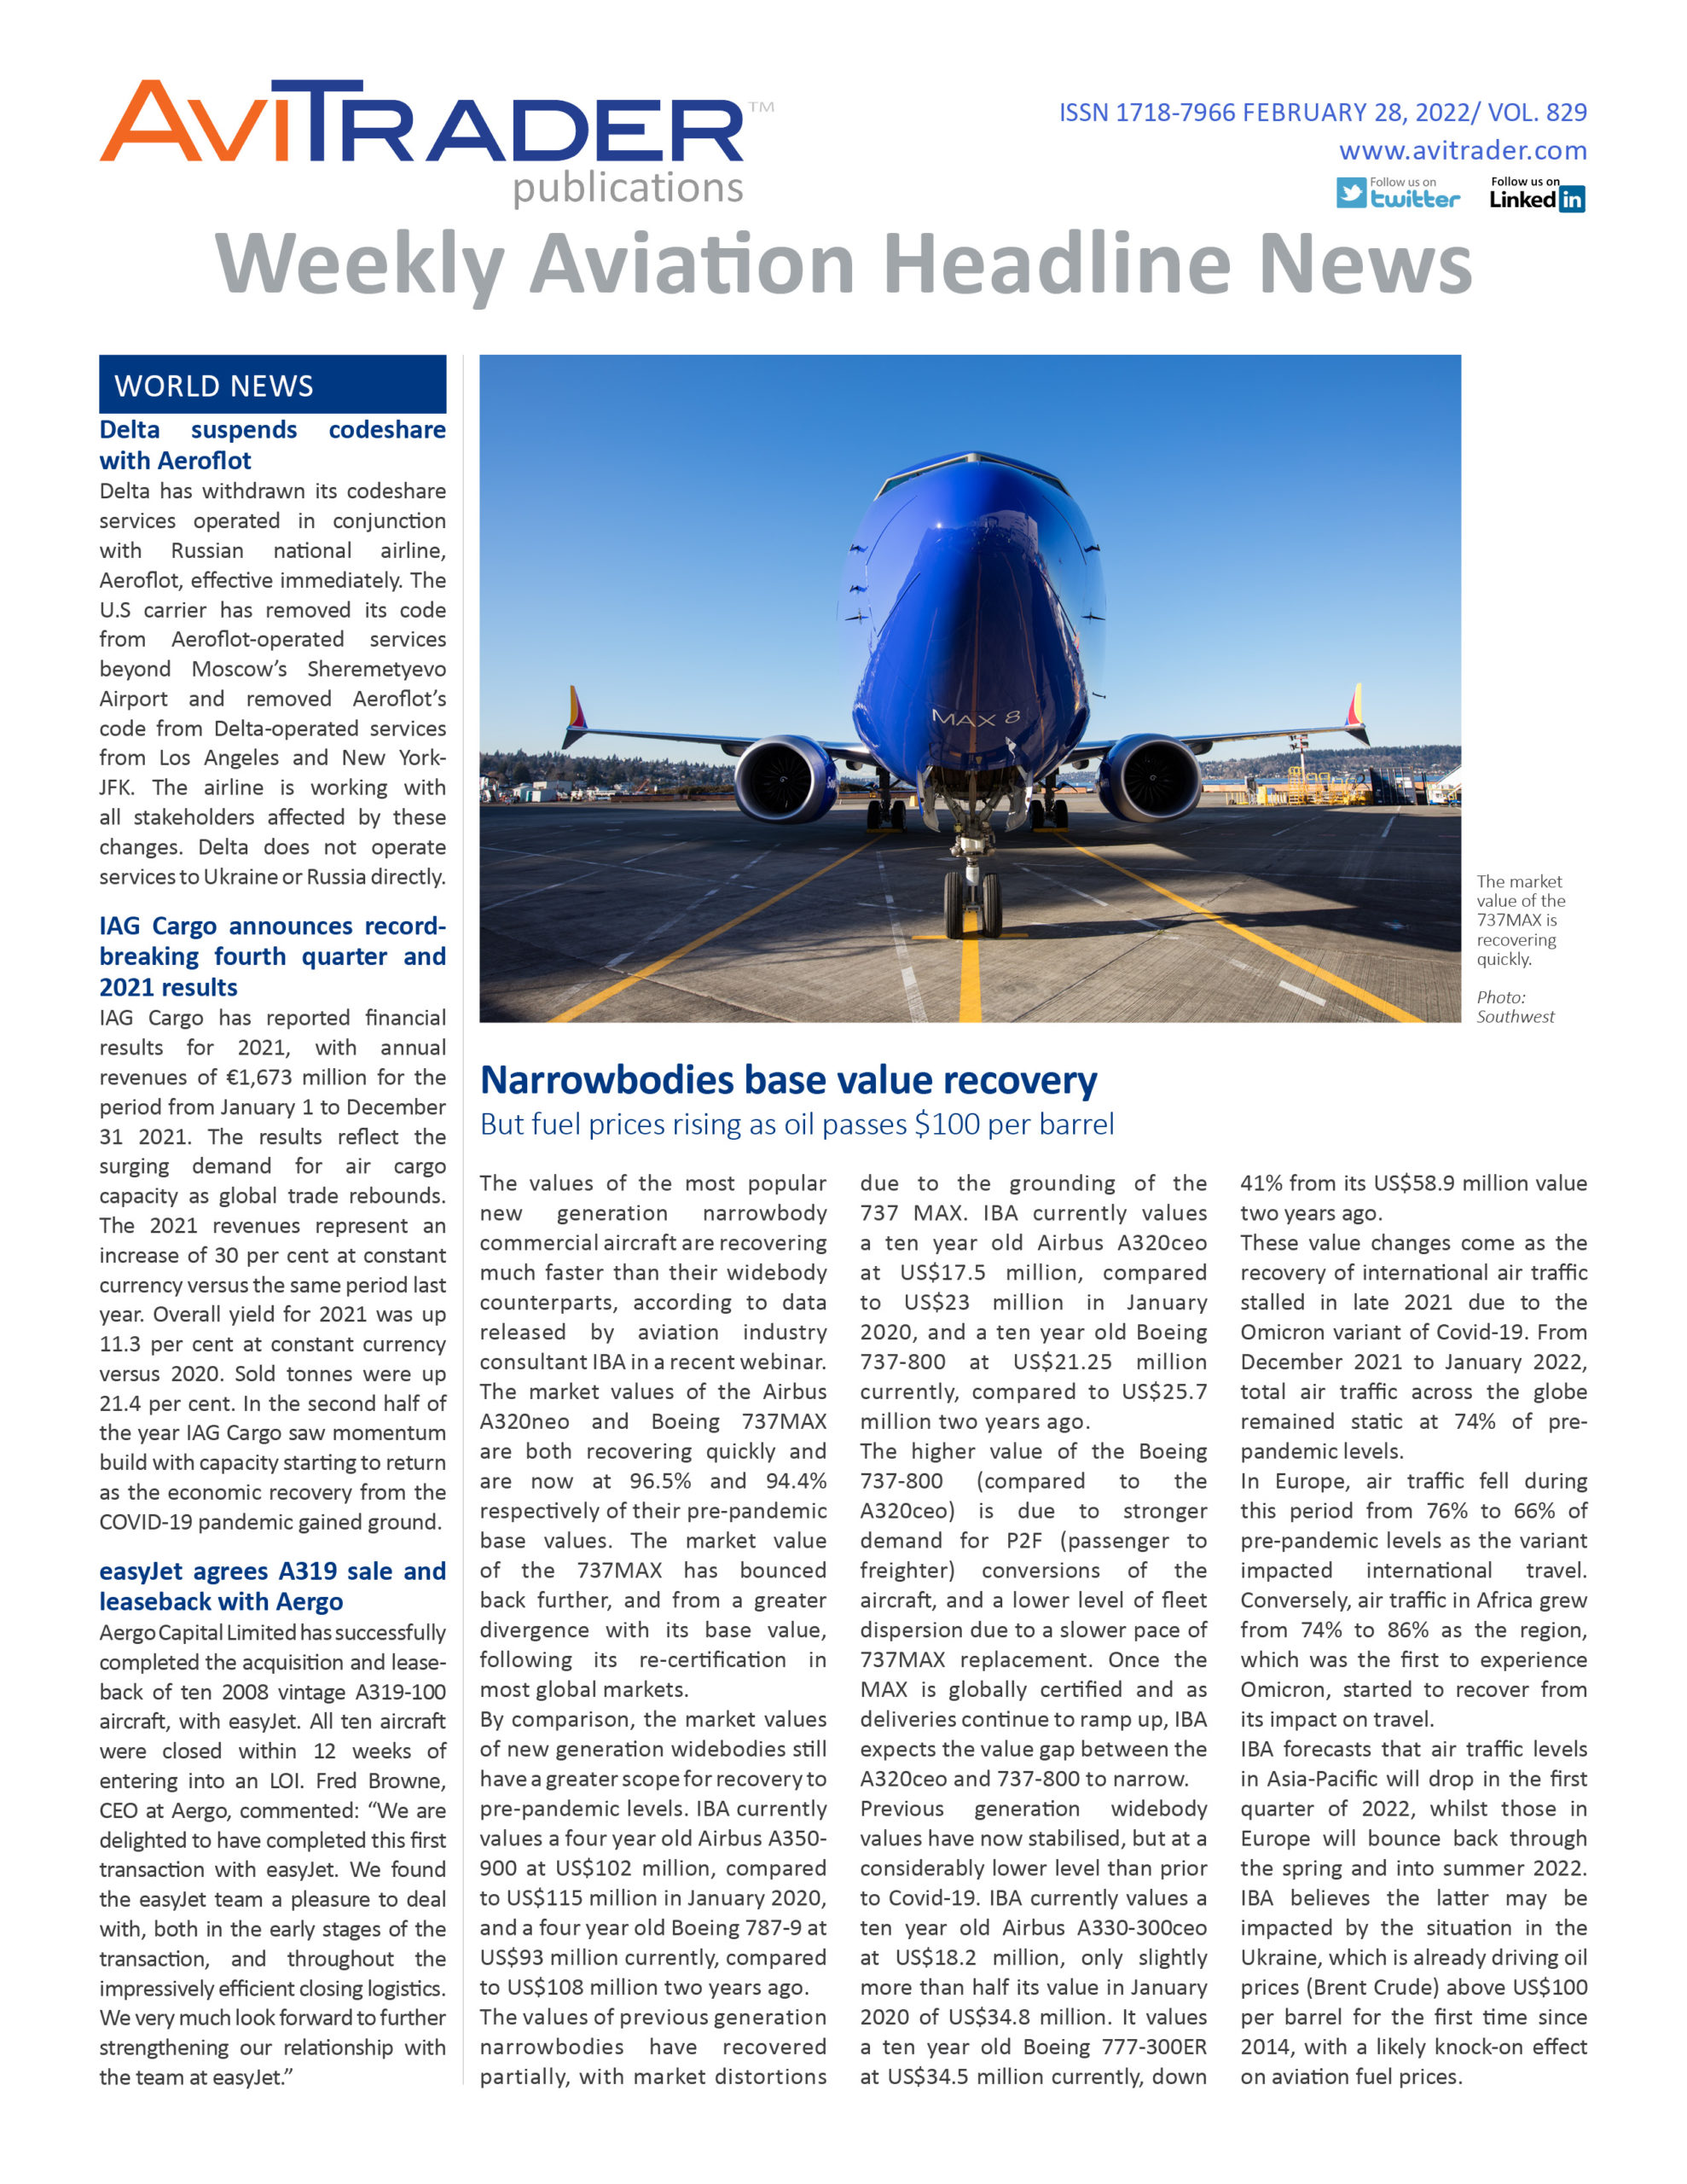 AviTrader_Weekly_Headline_News_Cover_2022-02-28